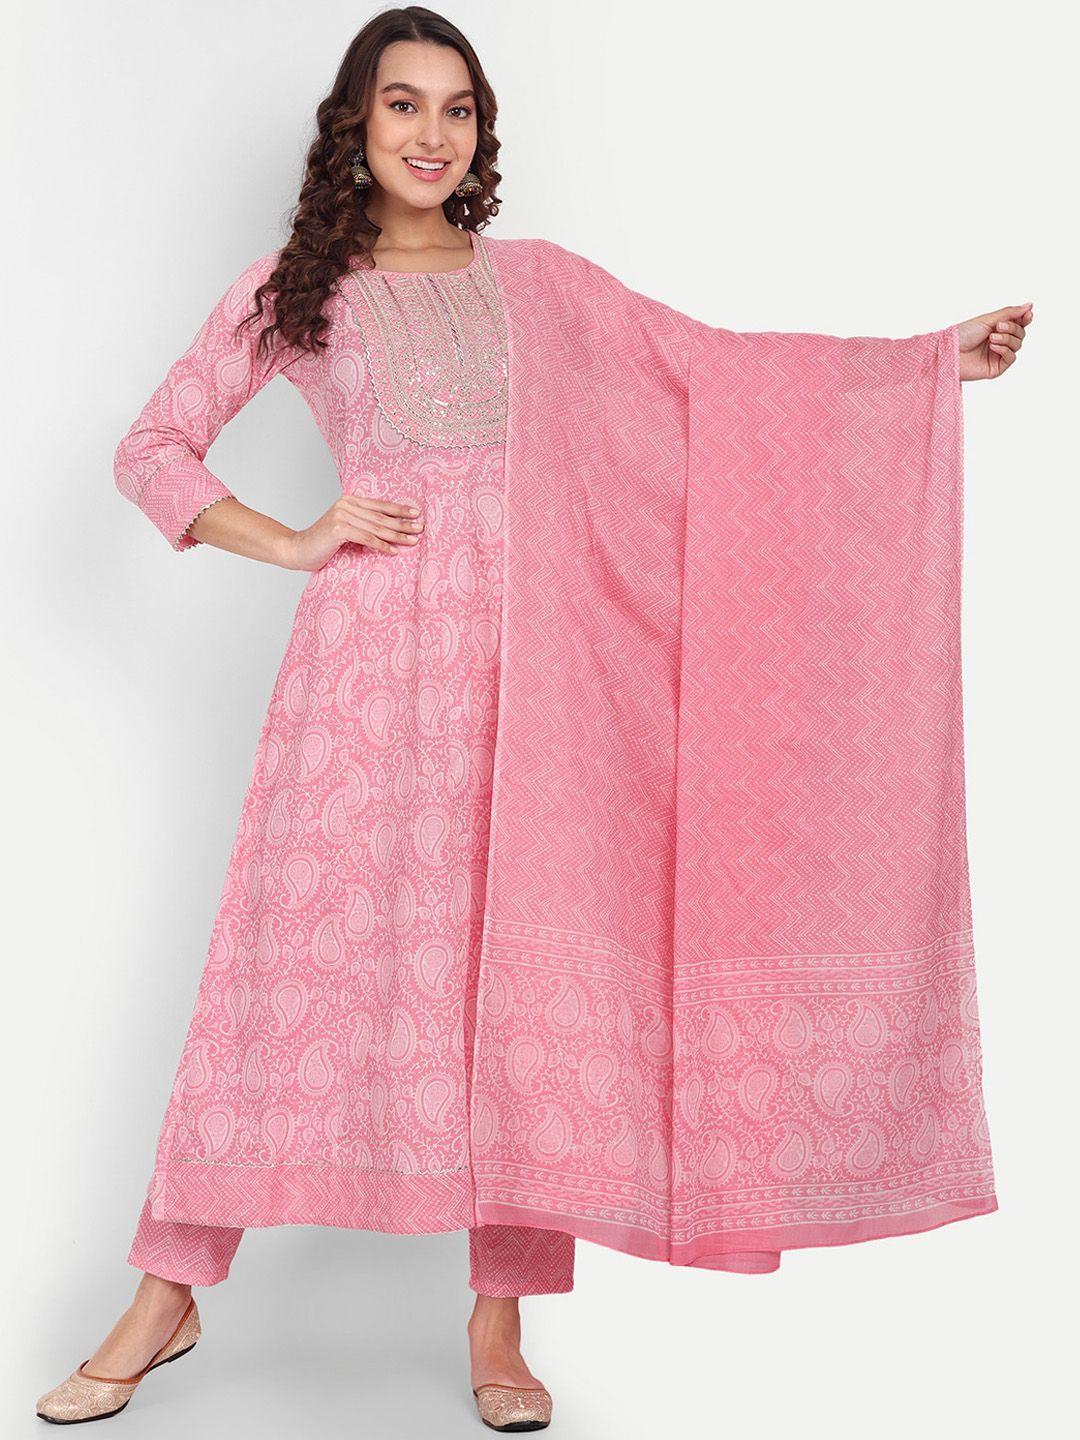 aarti fashion paisley embroidered pure cotton anarkali kurta with trousers & dupatta